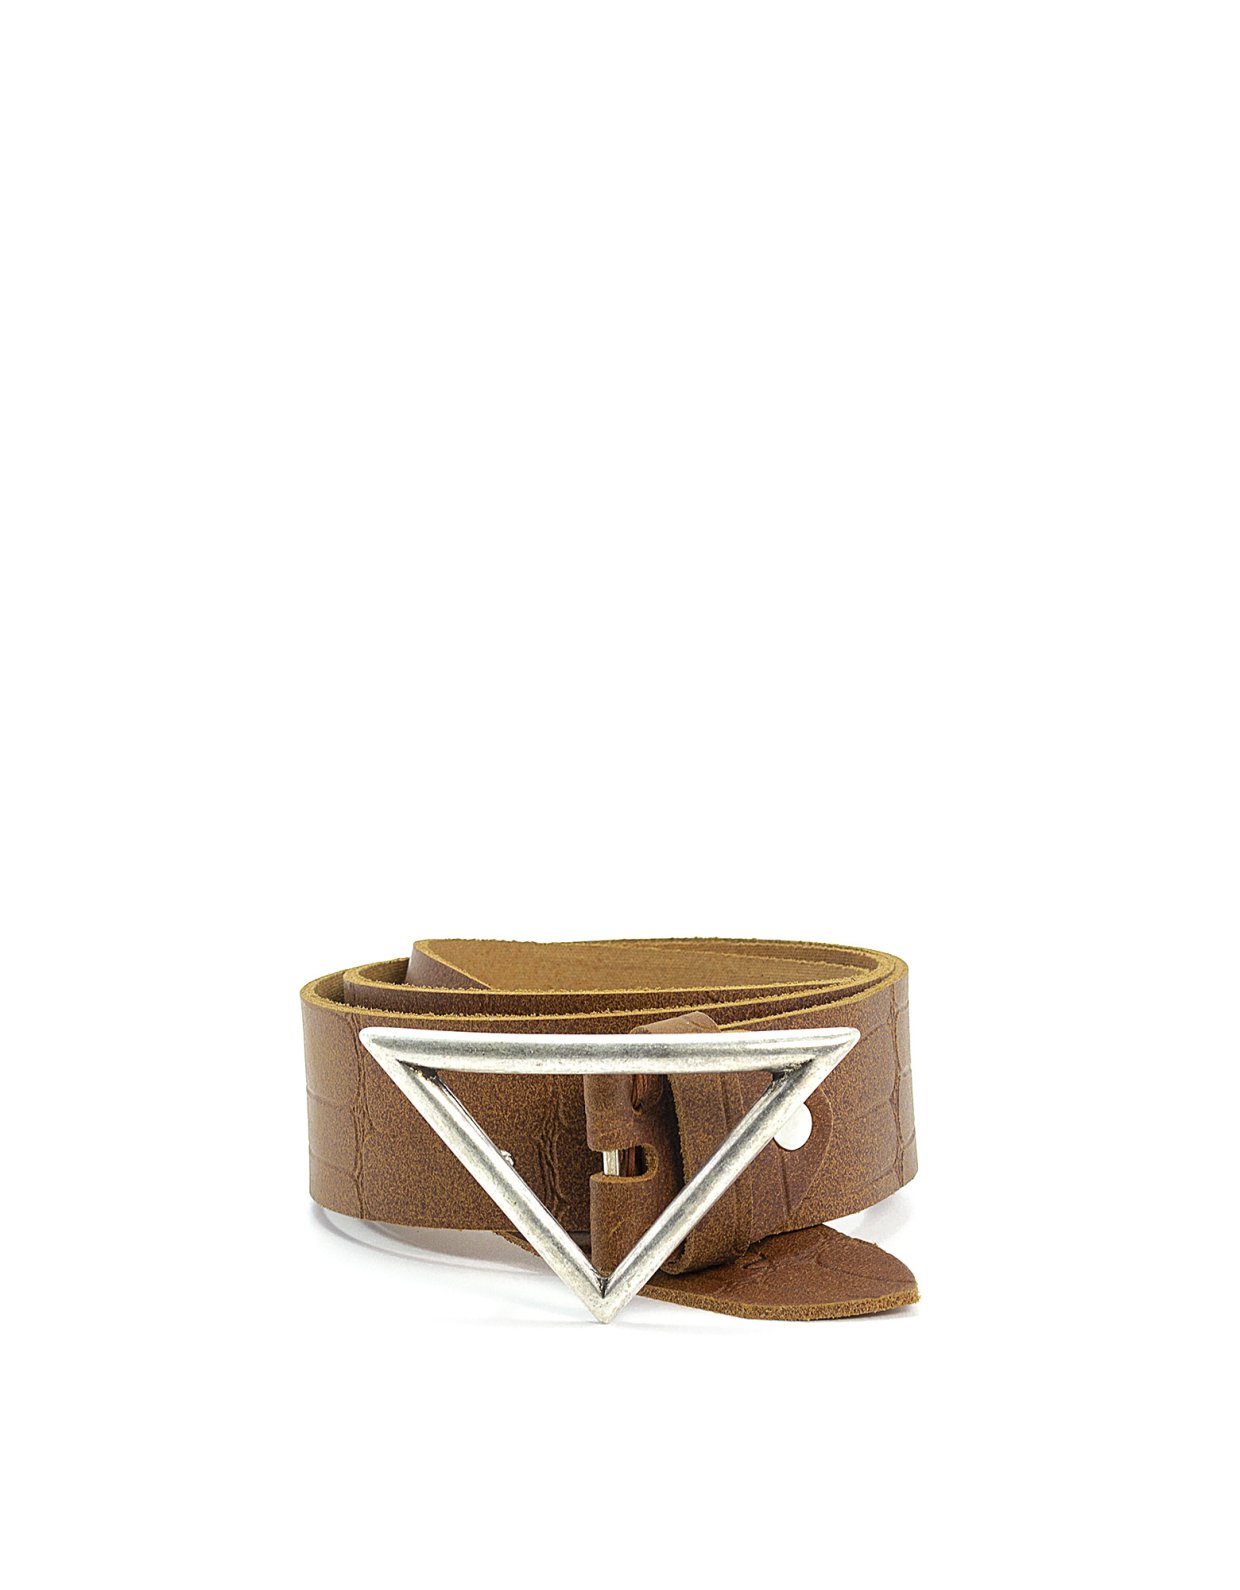 Individual Art Leather True belt taba croco